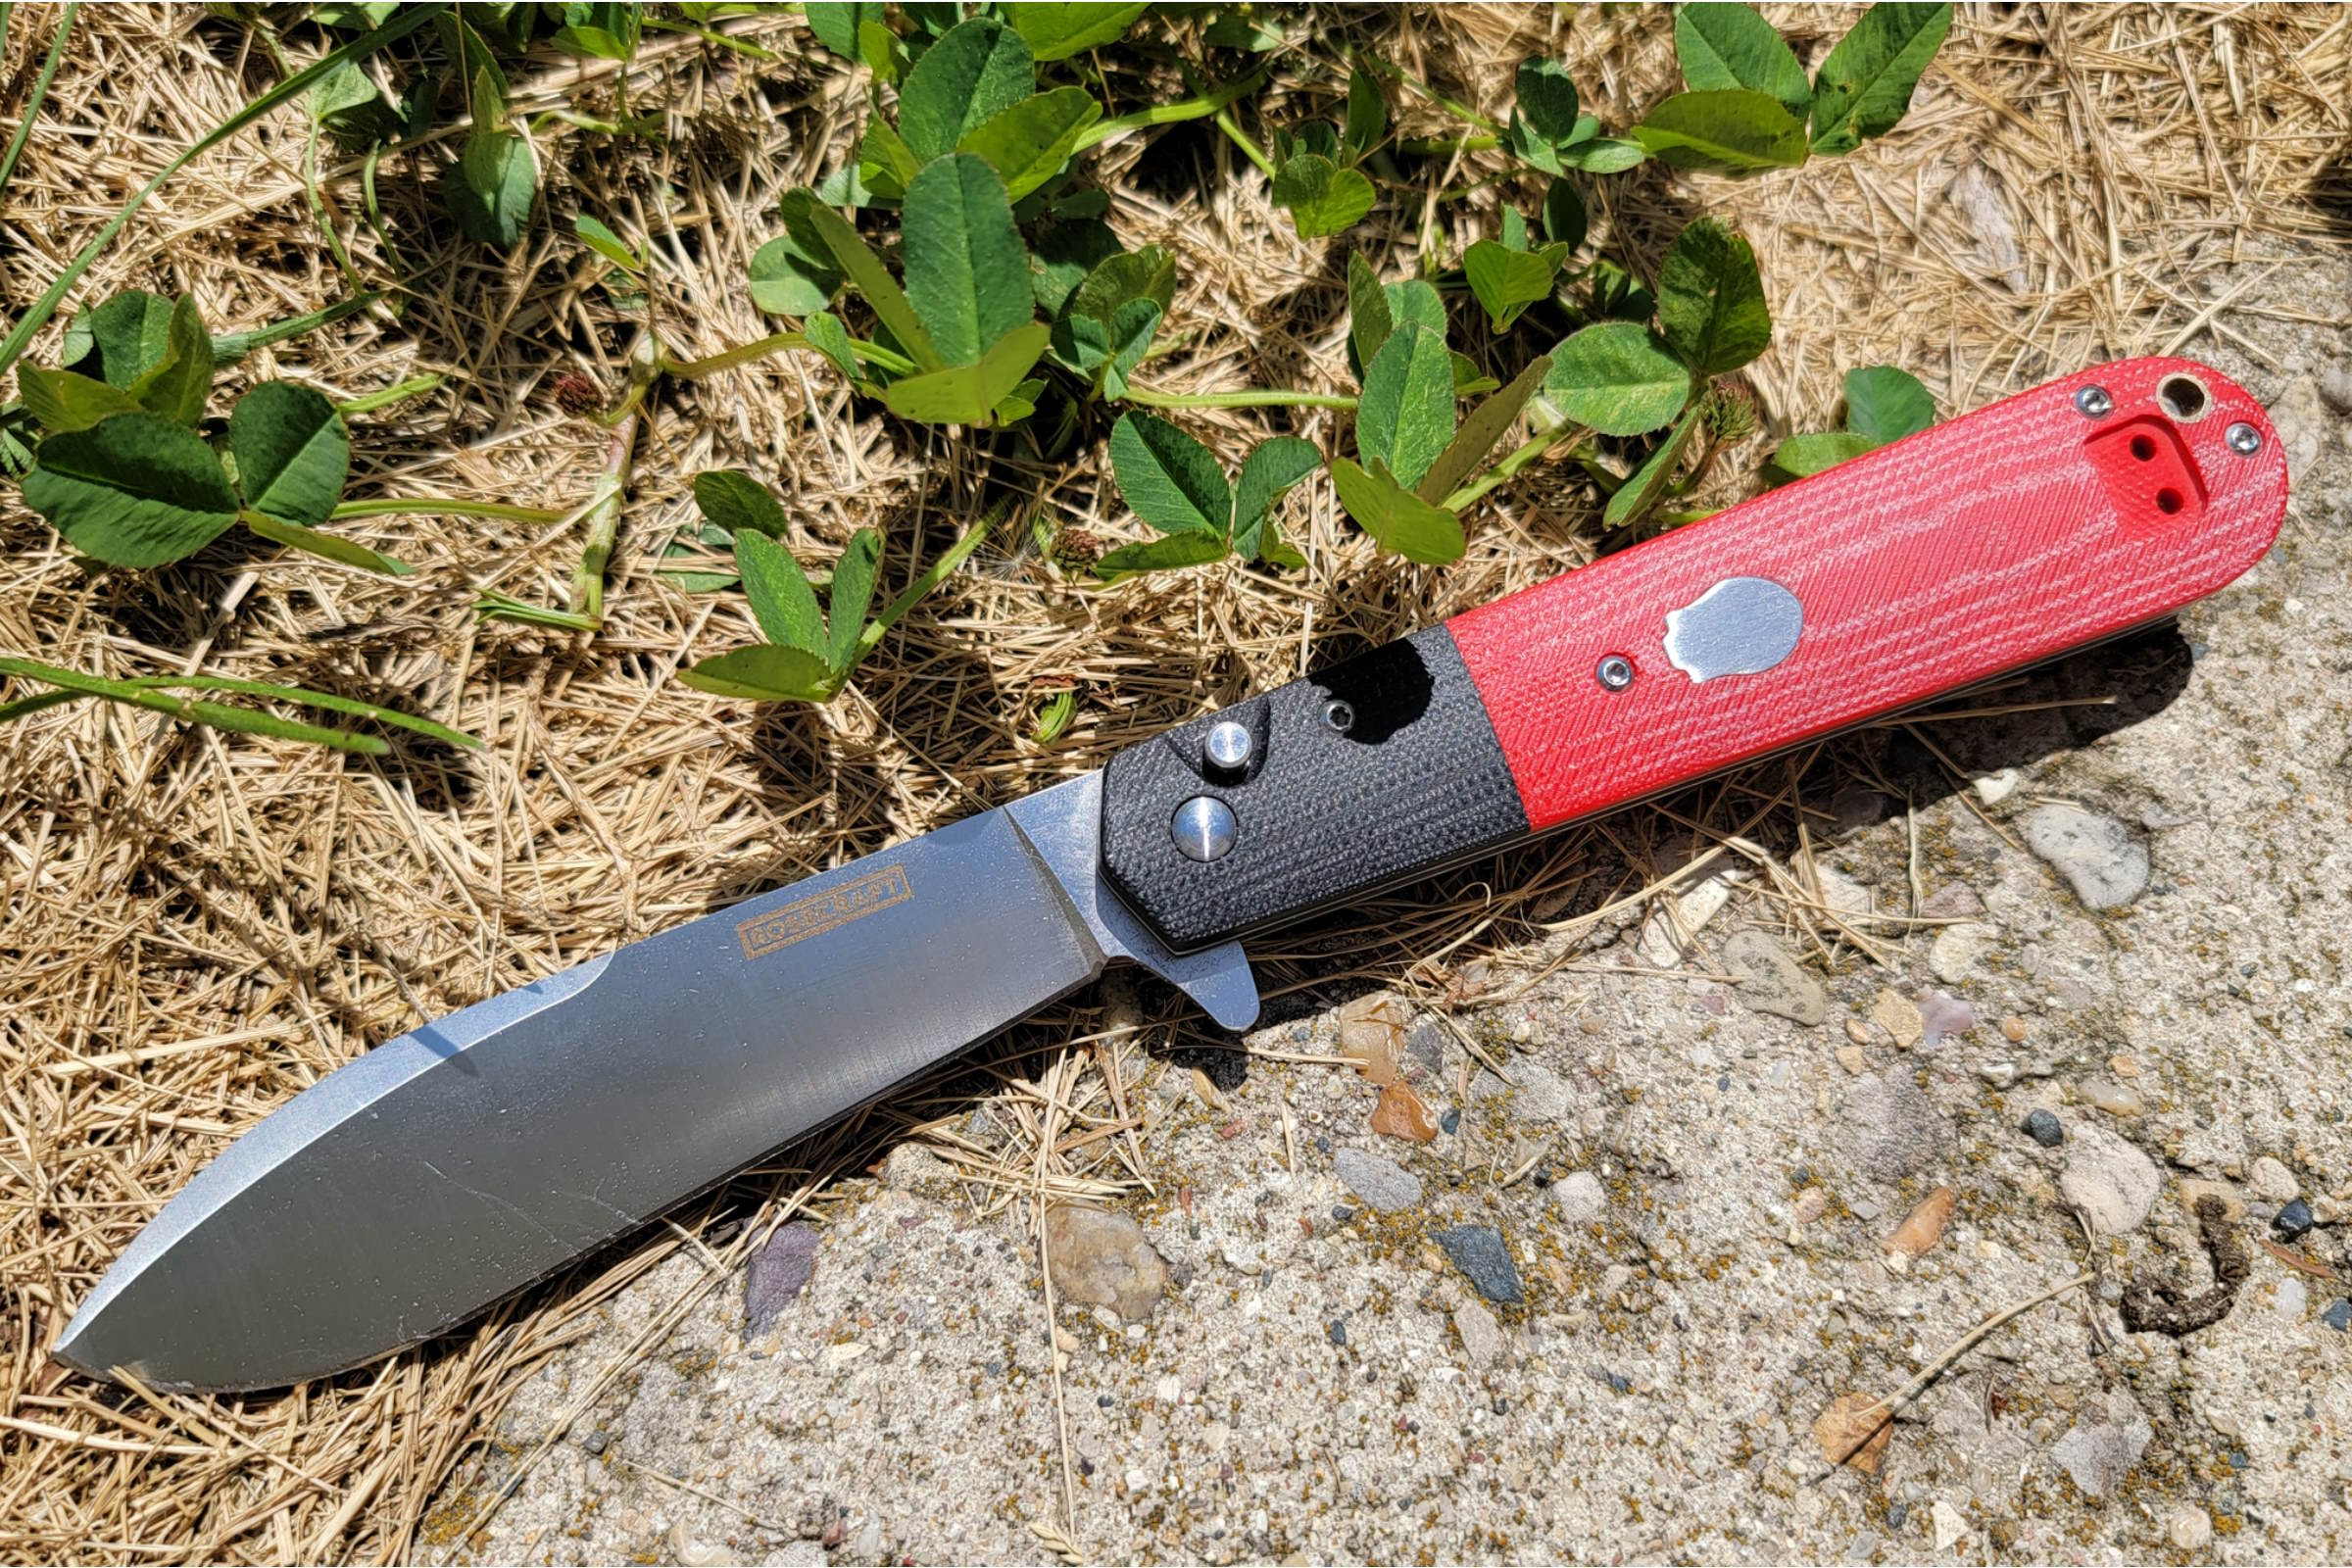 The Friendly, Unassuming Beaver Tail Blade: RoseCraft Castorea Pocket Knife Review